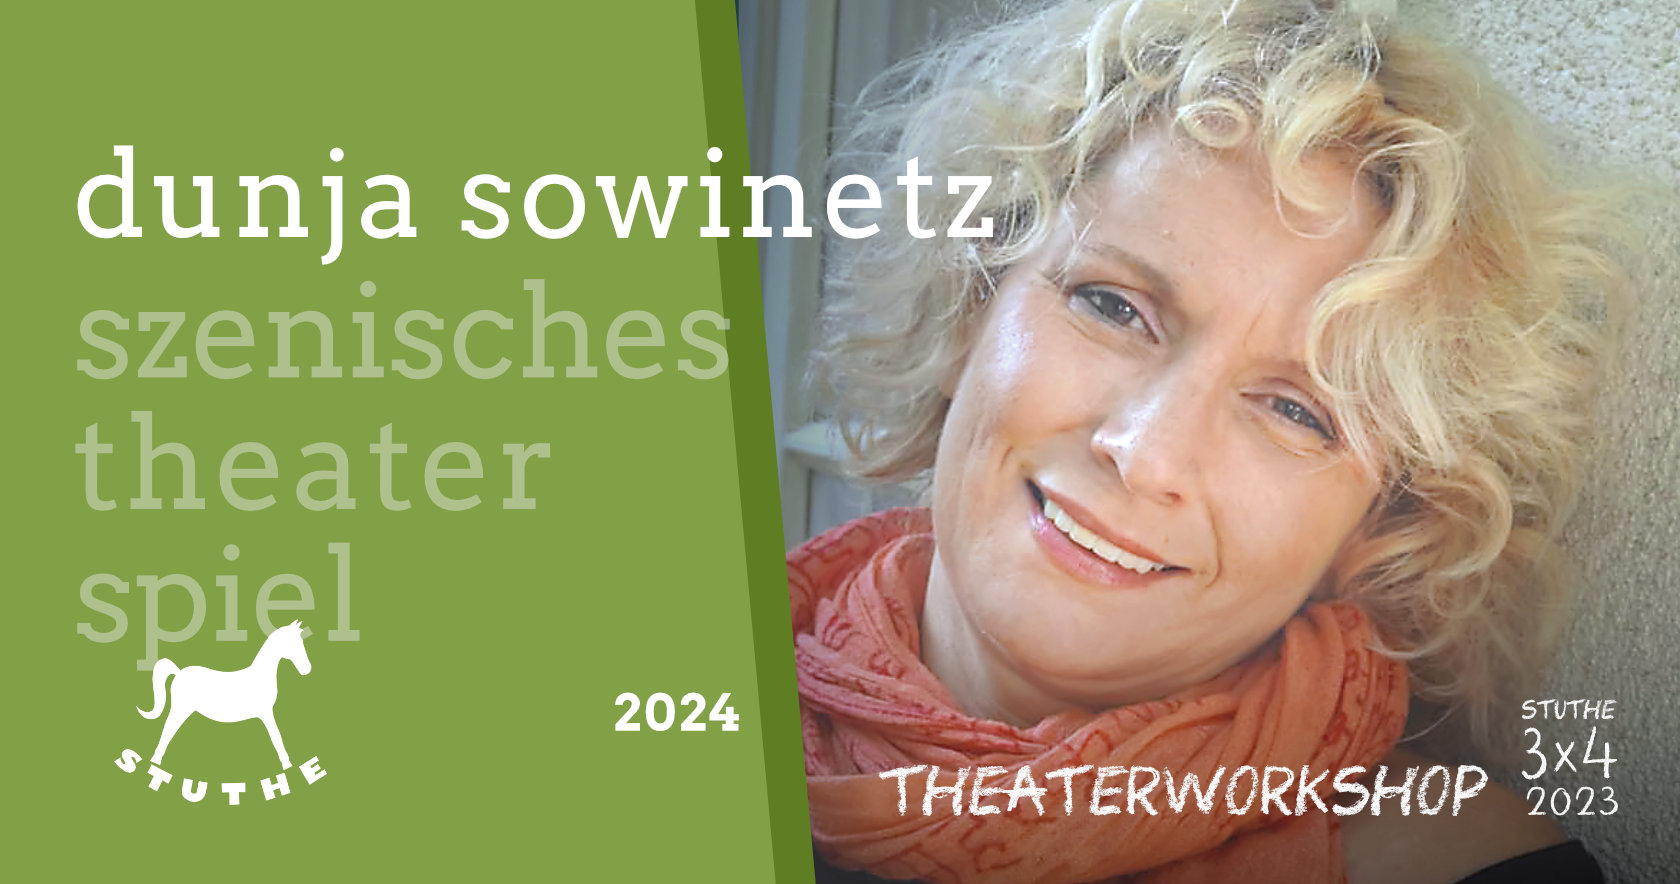 STUTHE Profi-Workshop 2023 mit Dunja Sowinetz